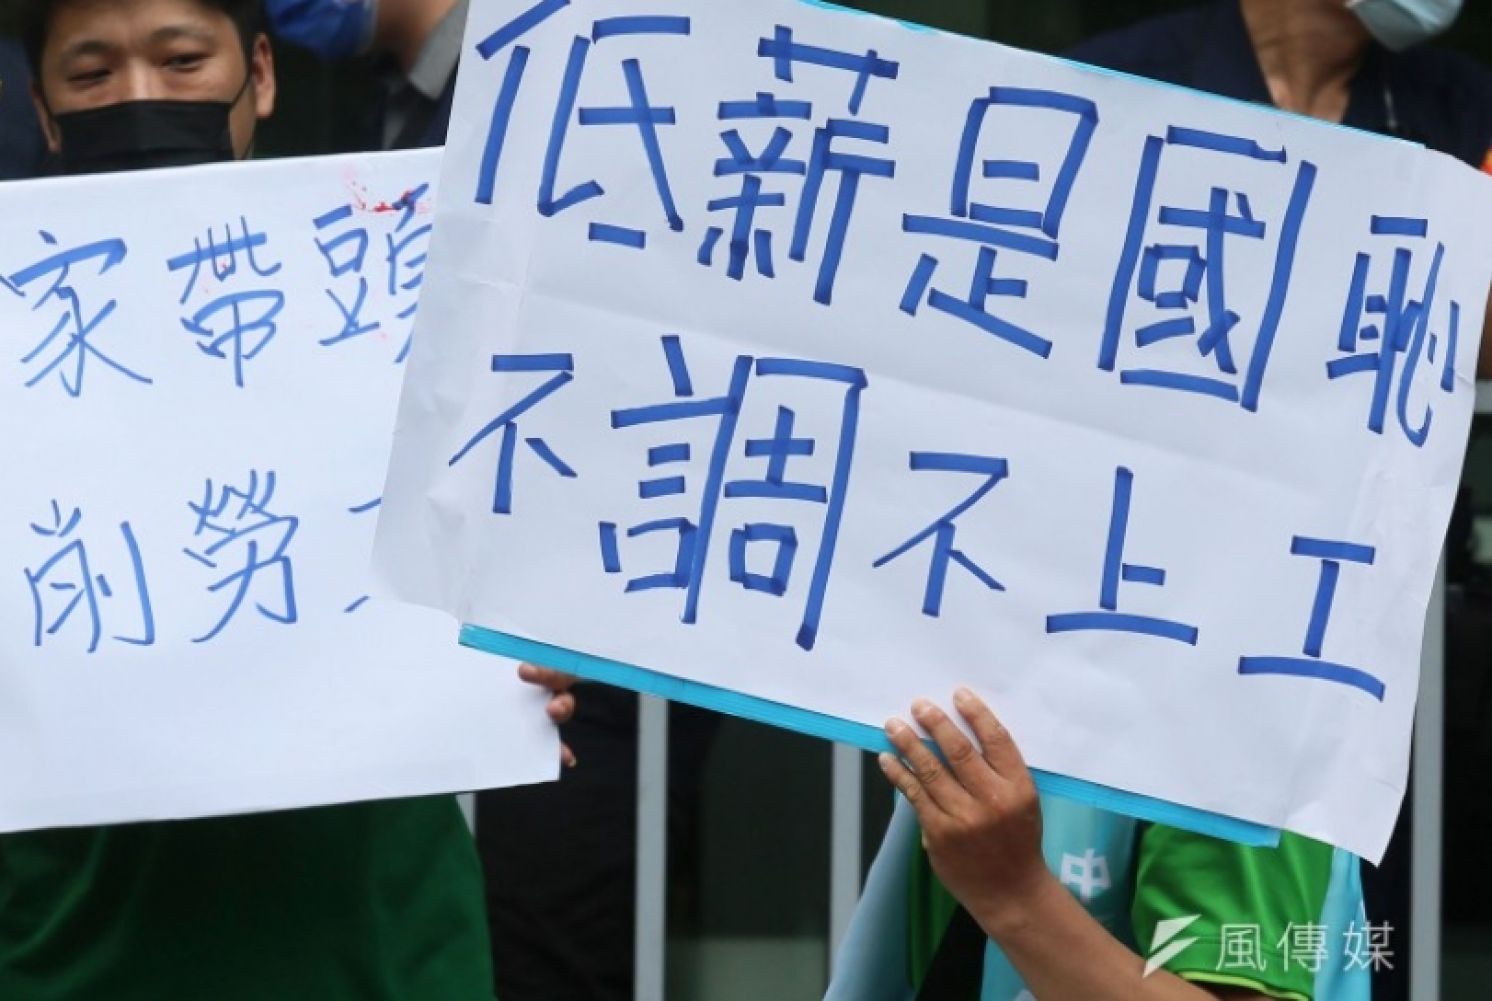 Disturbing Truth about Taiwan's Wealth Gap